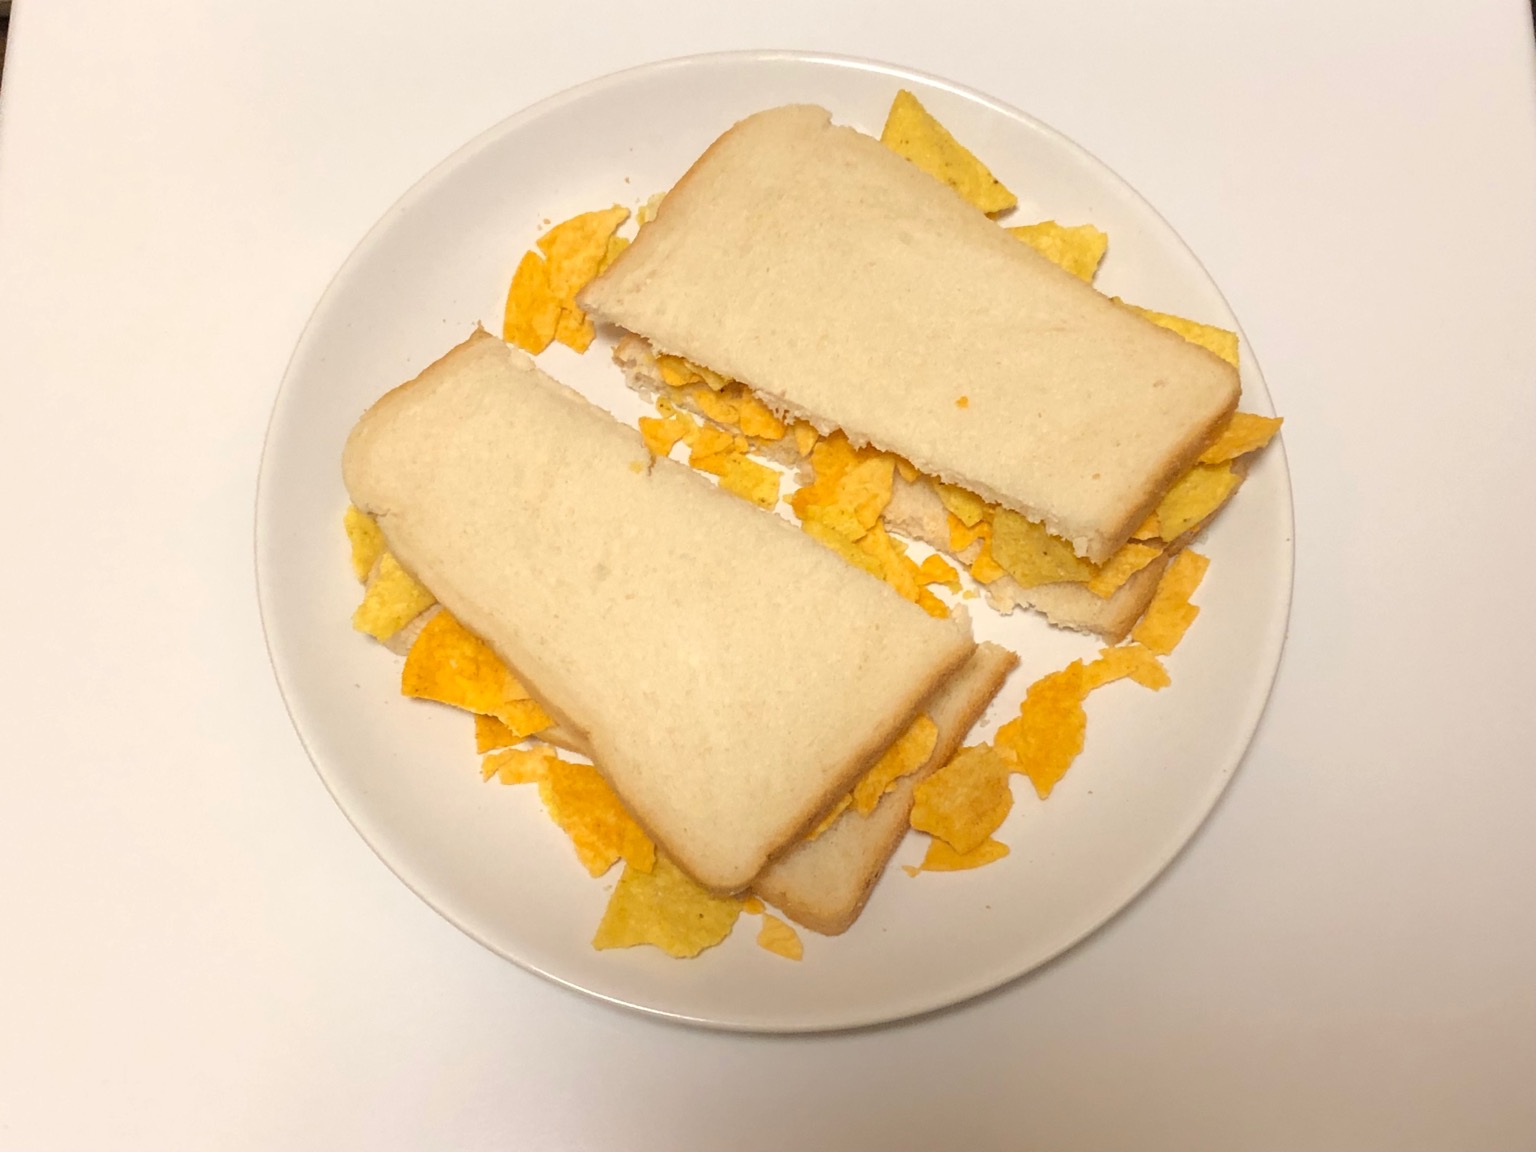 Doritos within and around white sliced bread